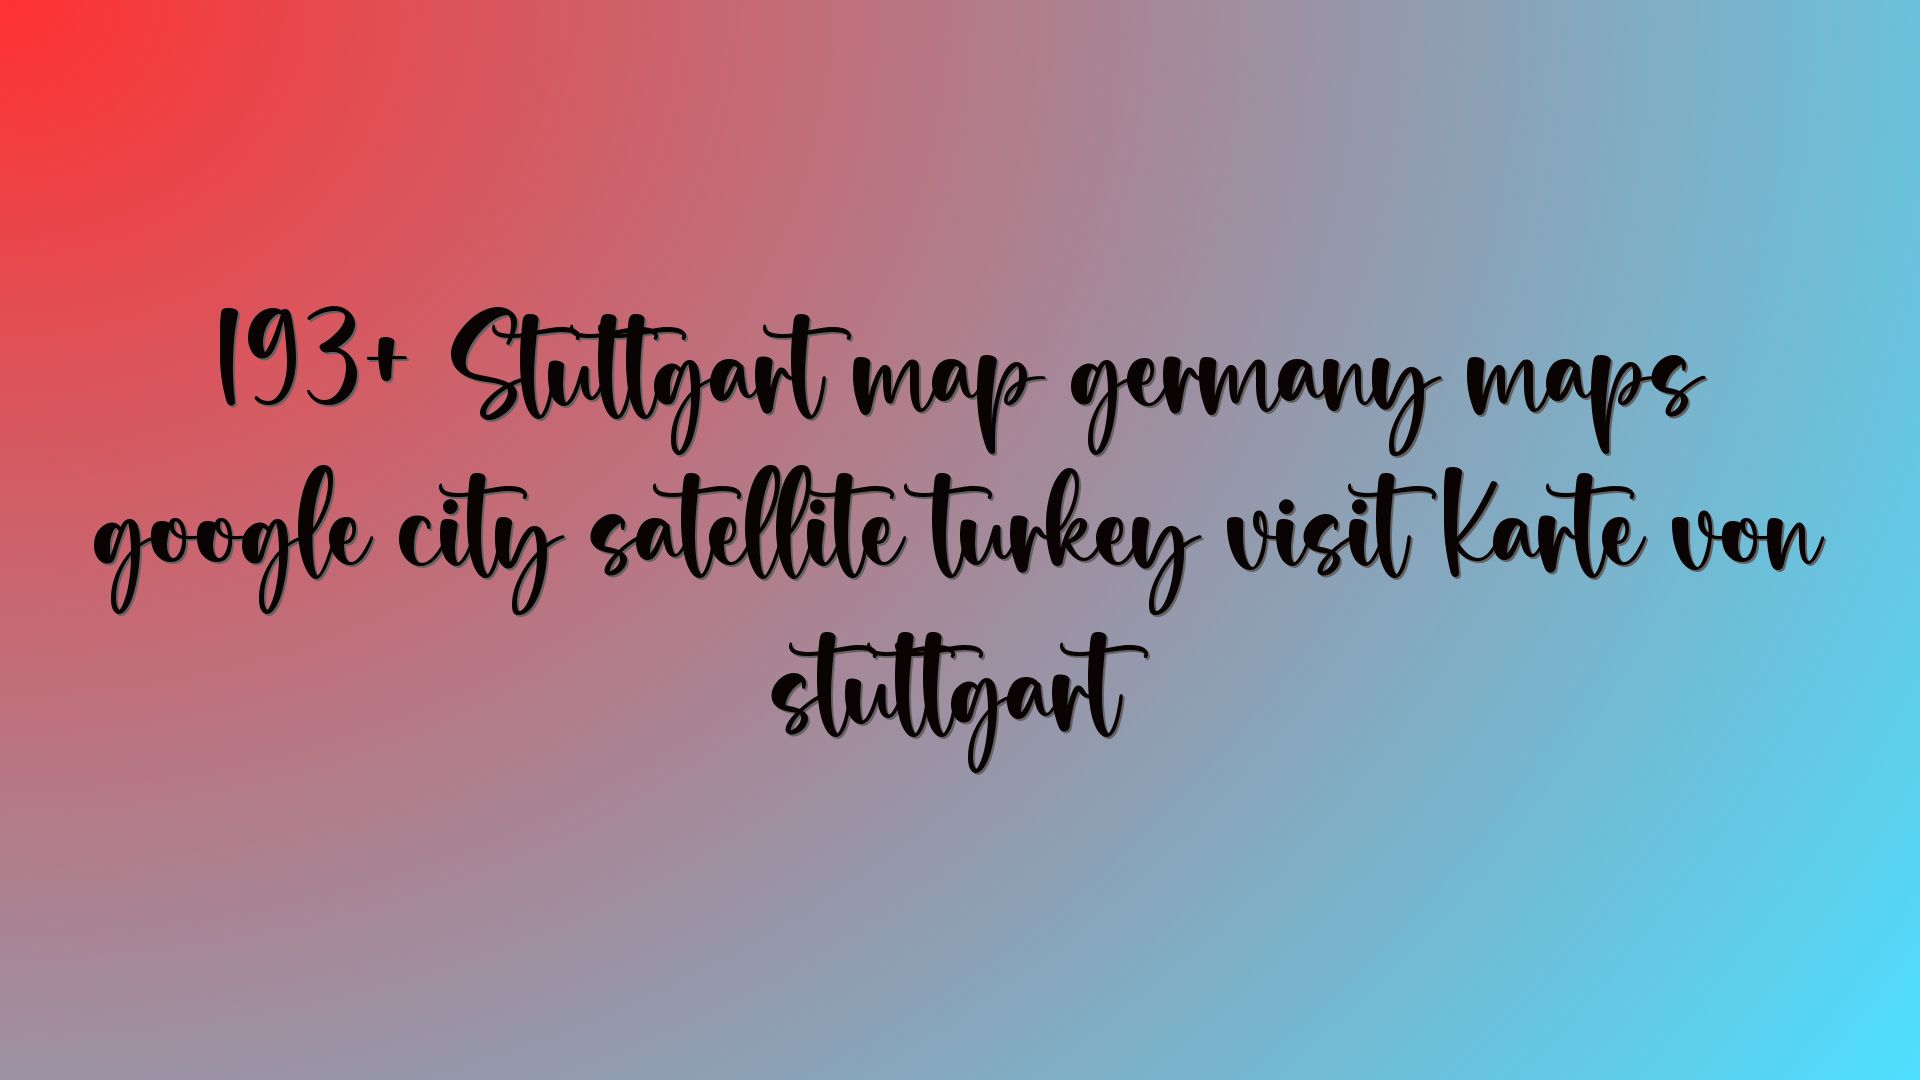 193+ Stuttgart map germany maps google city satellite turkey visit Karte von stuttgart